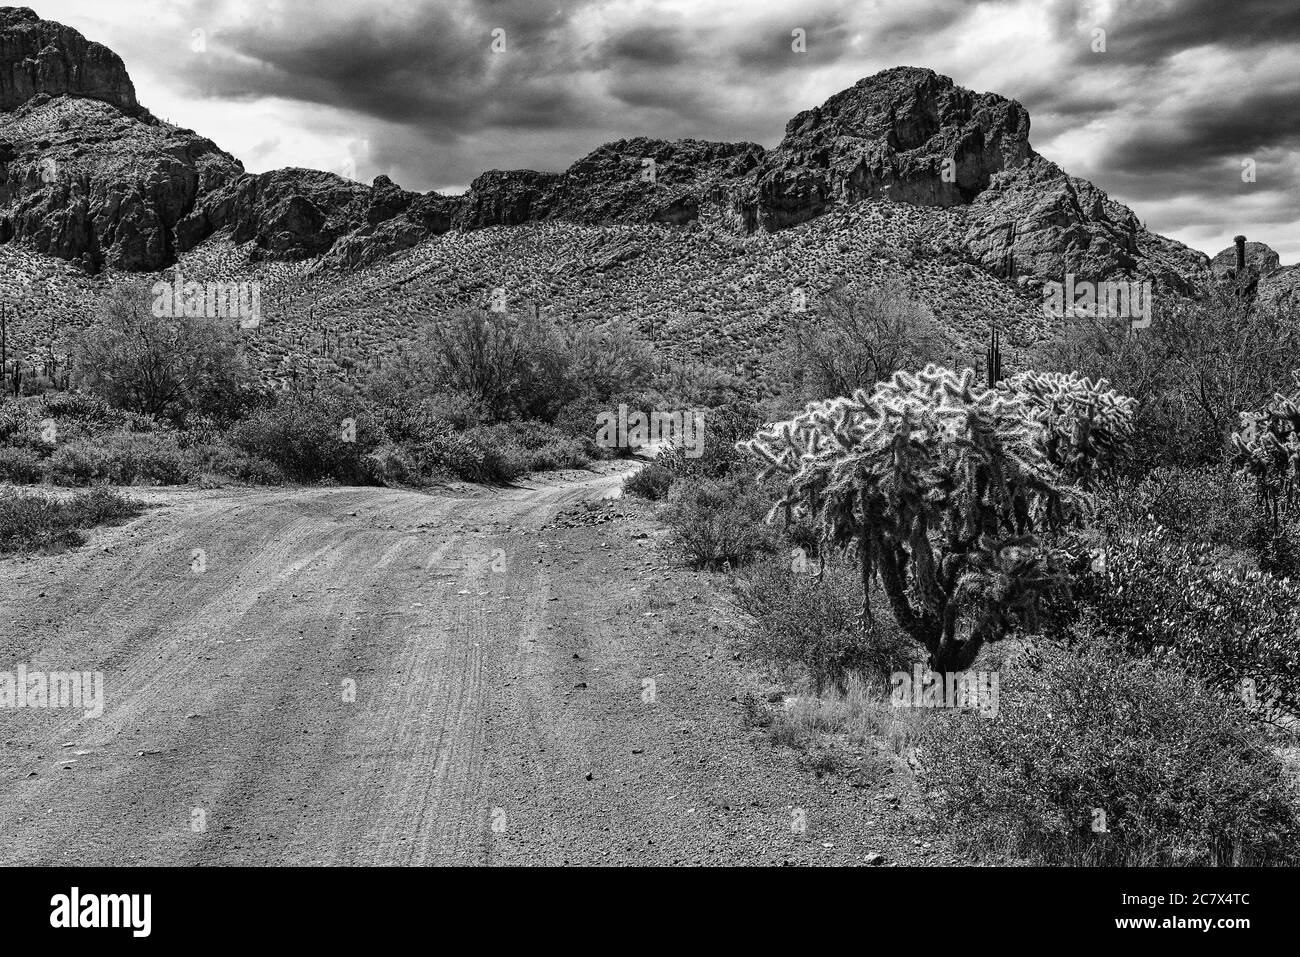 A view of the Sonoran Desert near Phoenix, Arizona. Stock Photo